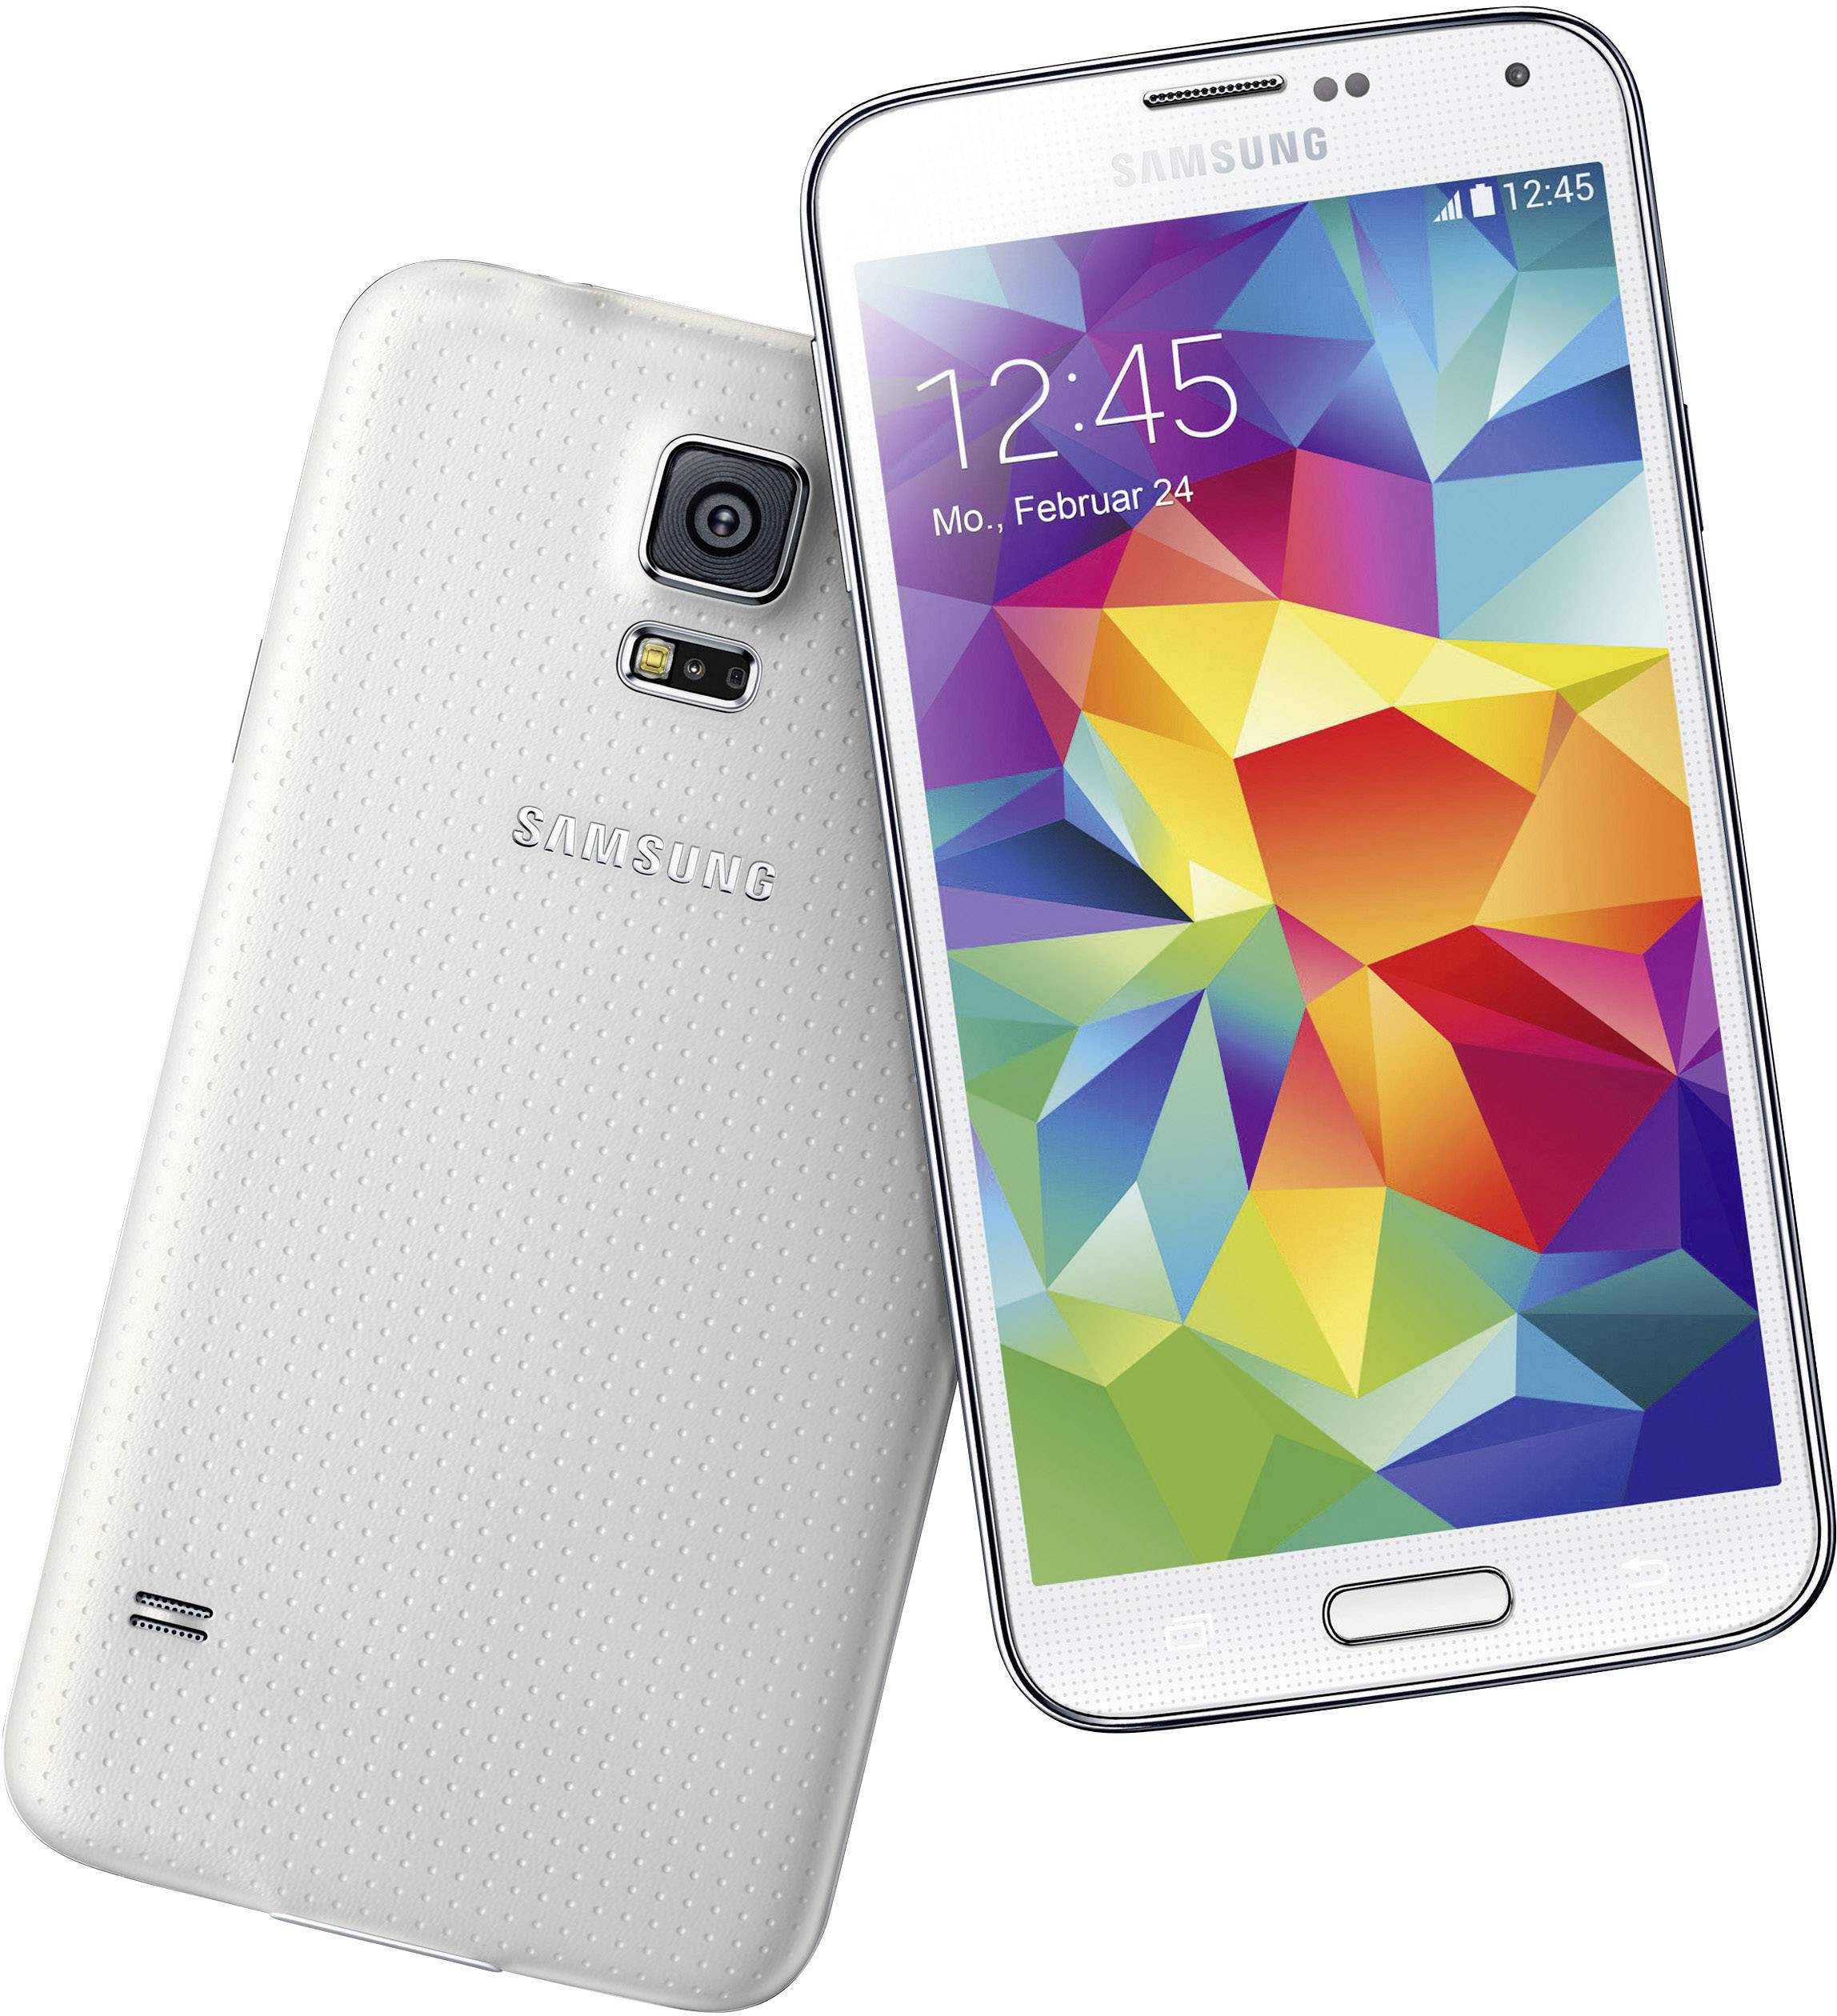 NieuwZeeland Bisschop Landgoed Samsung Galaxy S5 Smartphone 16 GB 5.1 inch (13 cm) Android™ 4.4 White |  Conrad.com